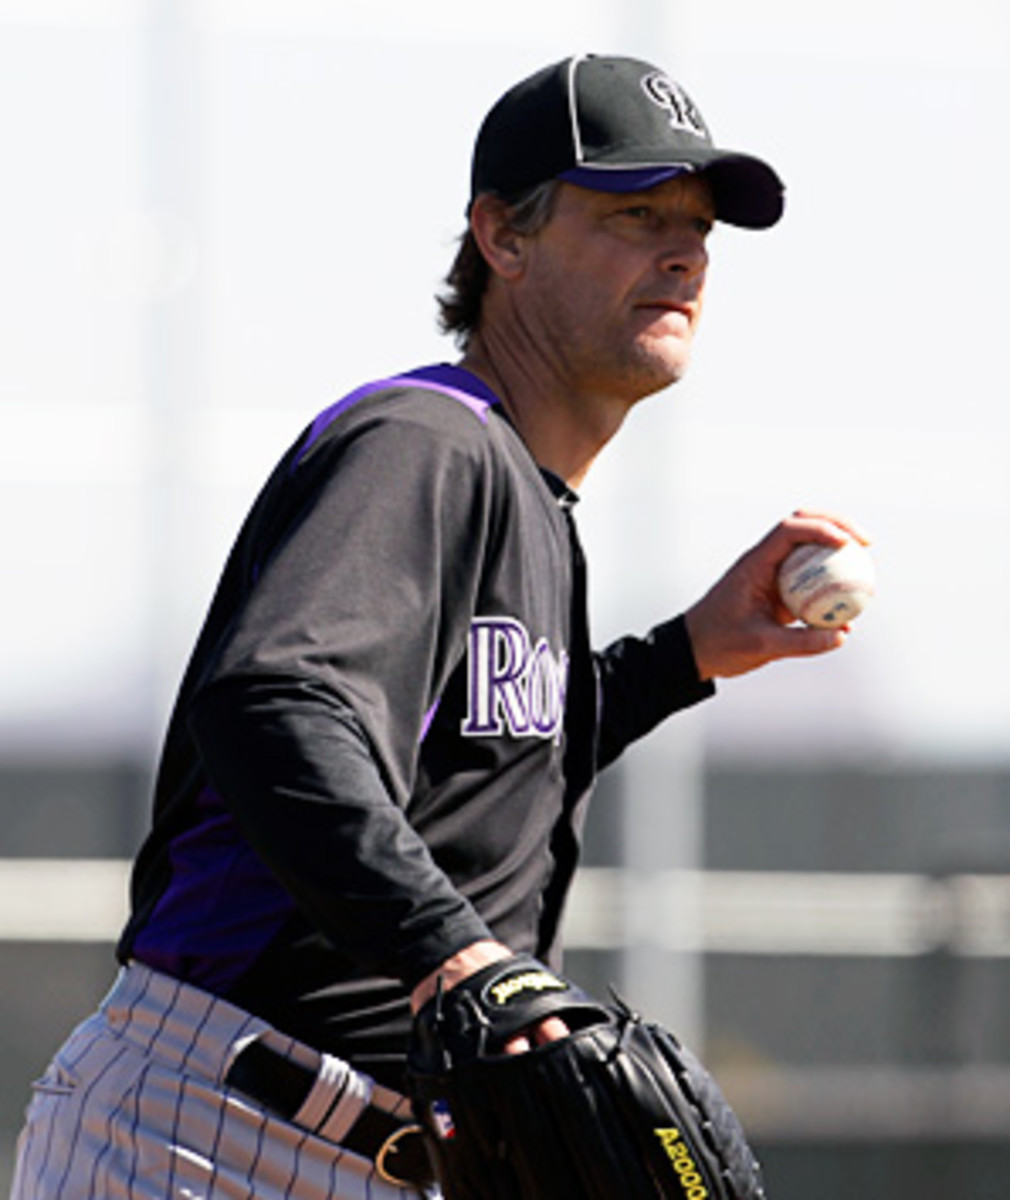 Tom Verducci: Jamie Moyer's comeback at age 49 embodies baseball's